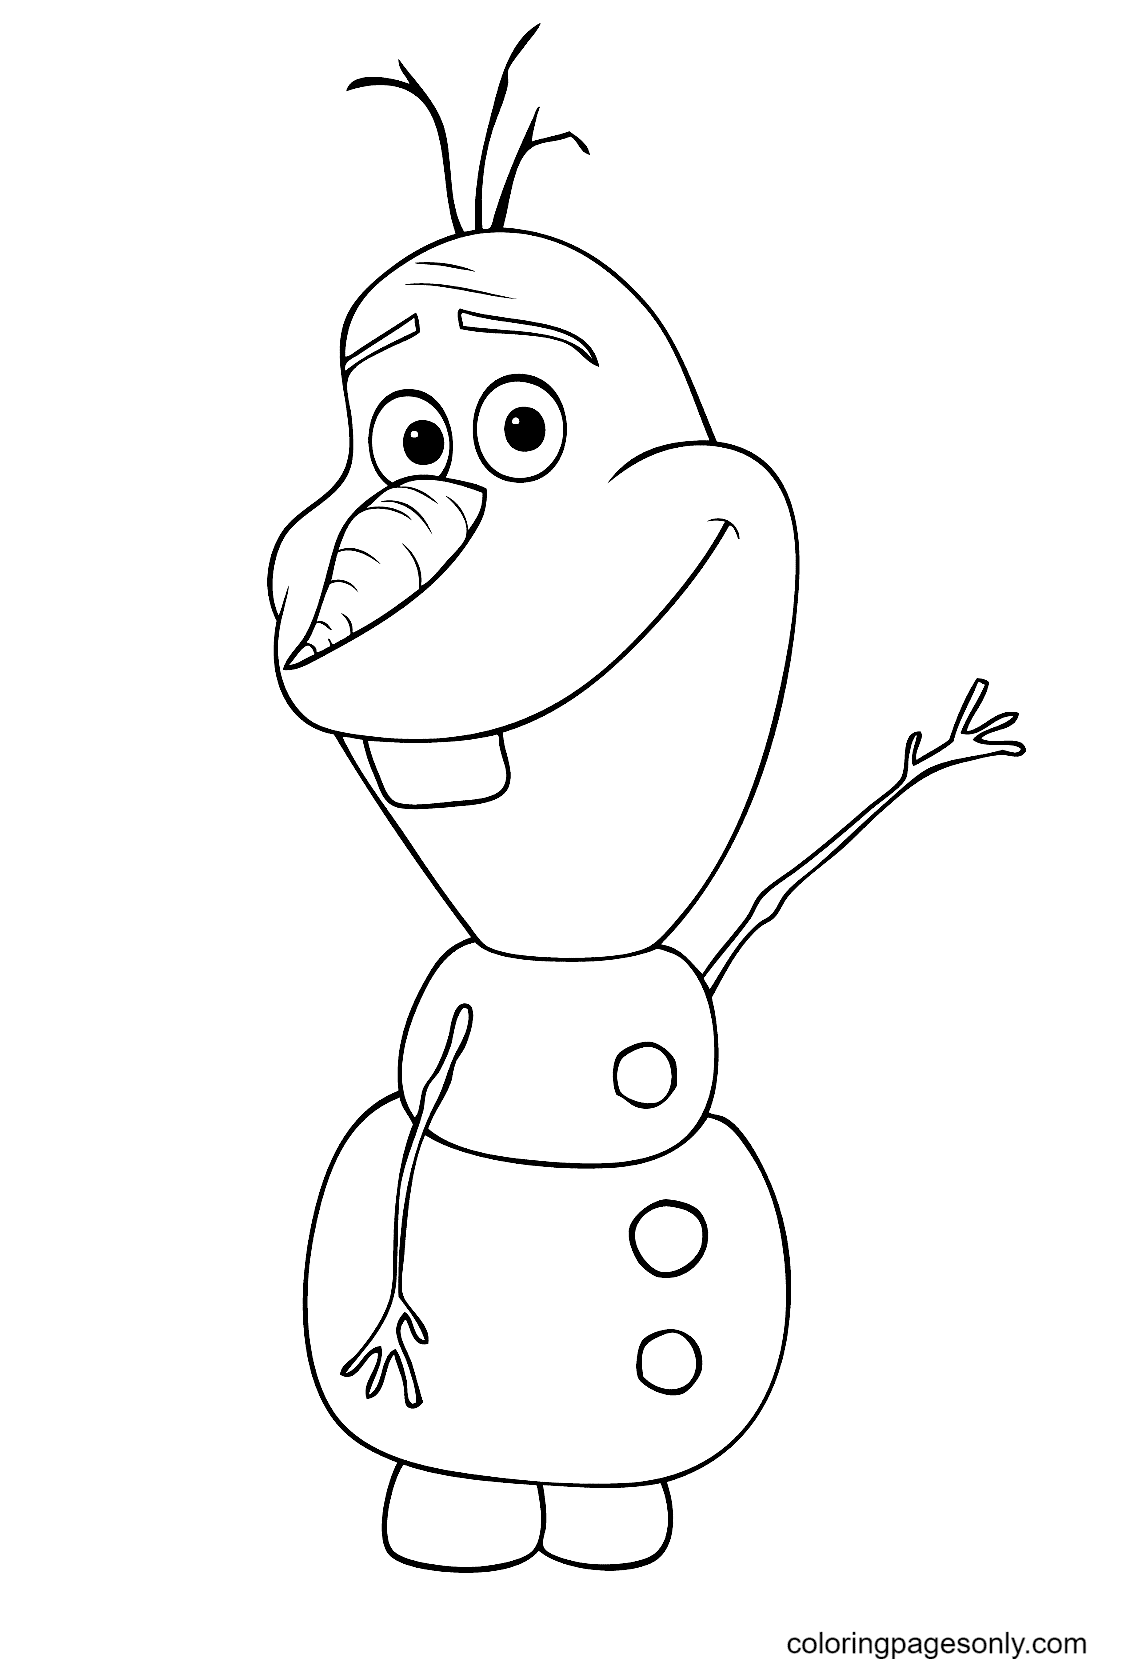 Schattige Olaf van Olaf